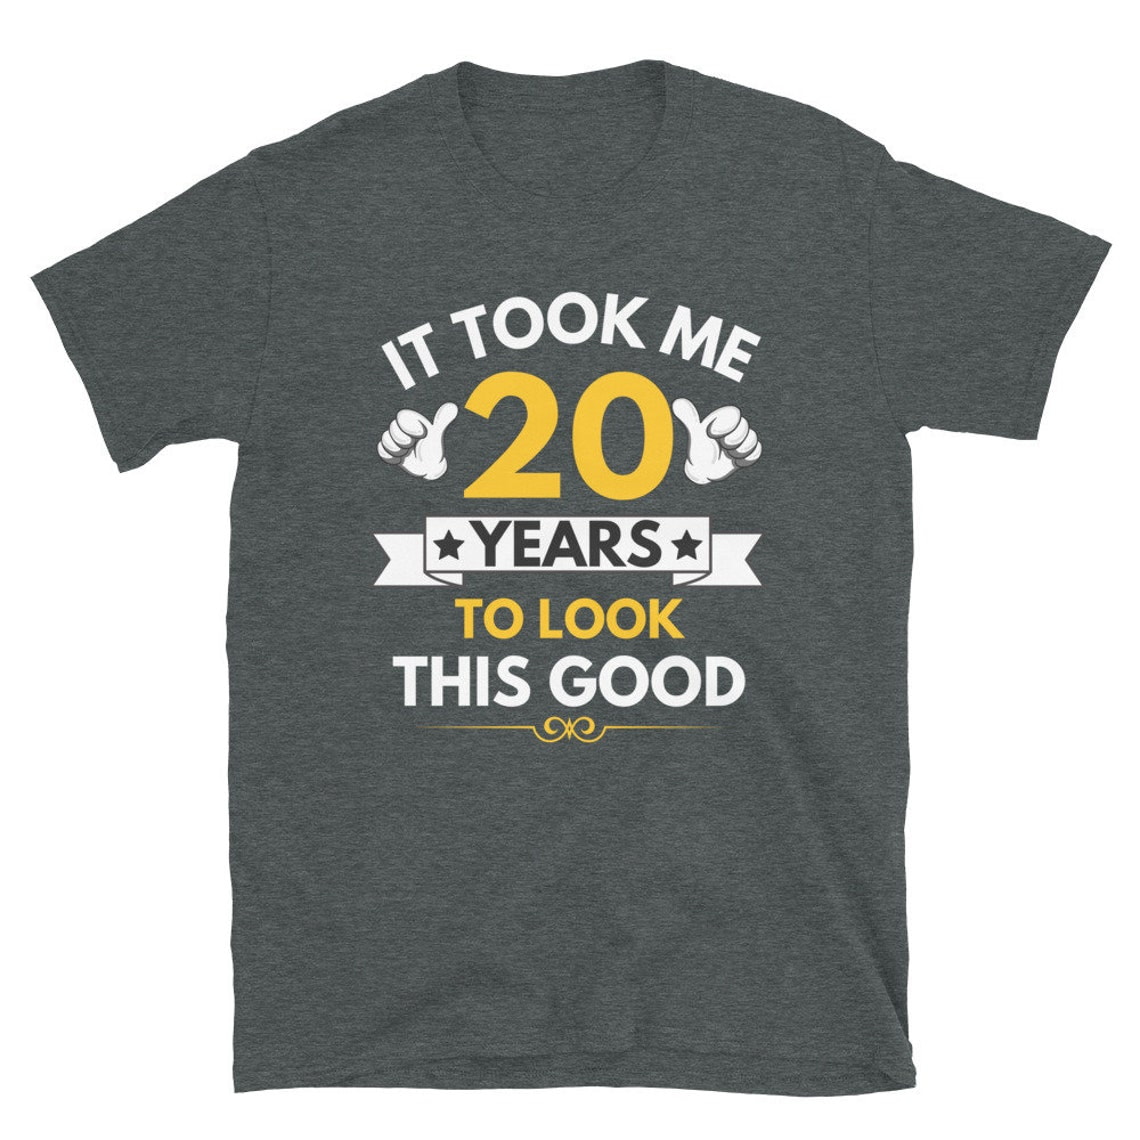 It took me 20 years to look this good Shirt Milestone Birthday Gift